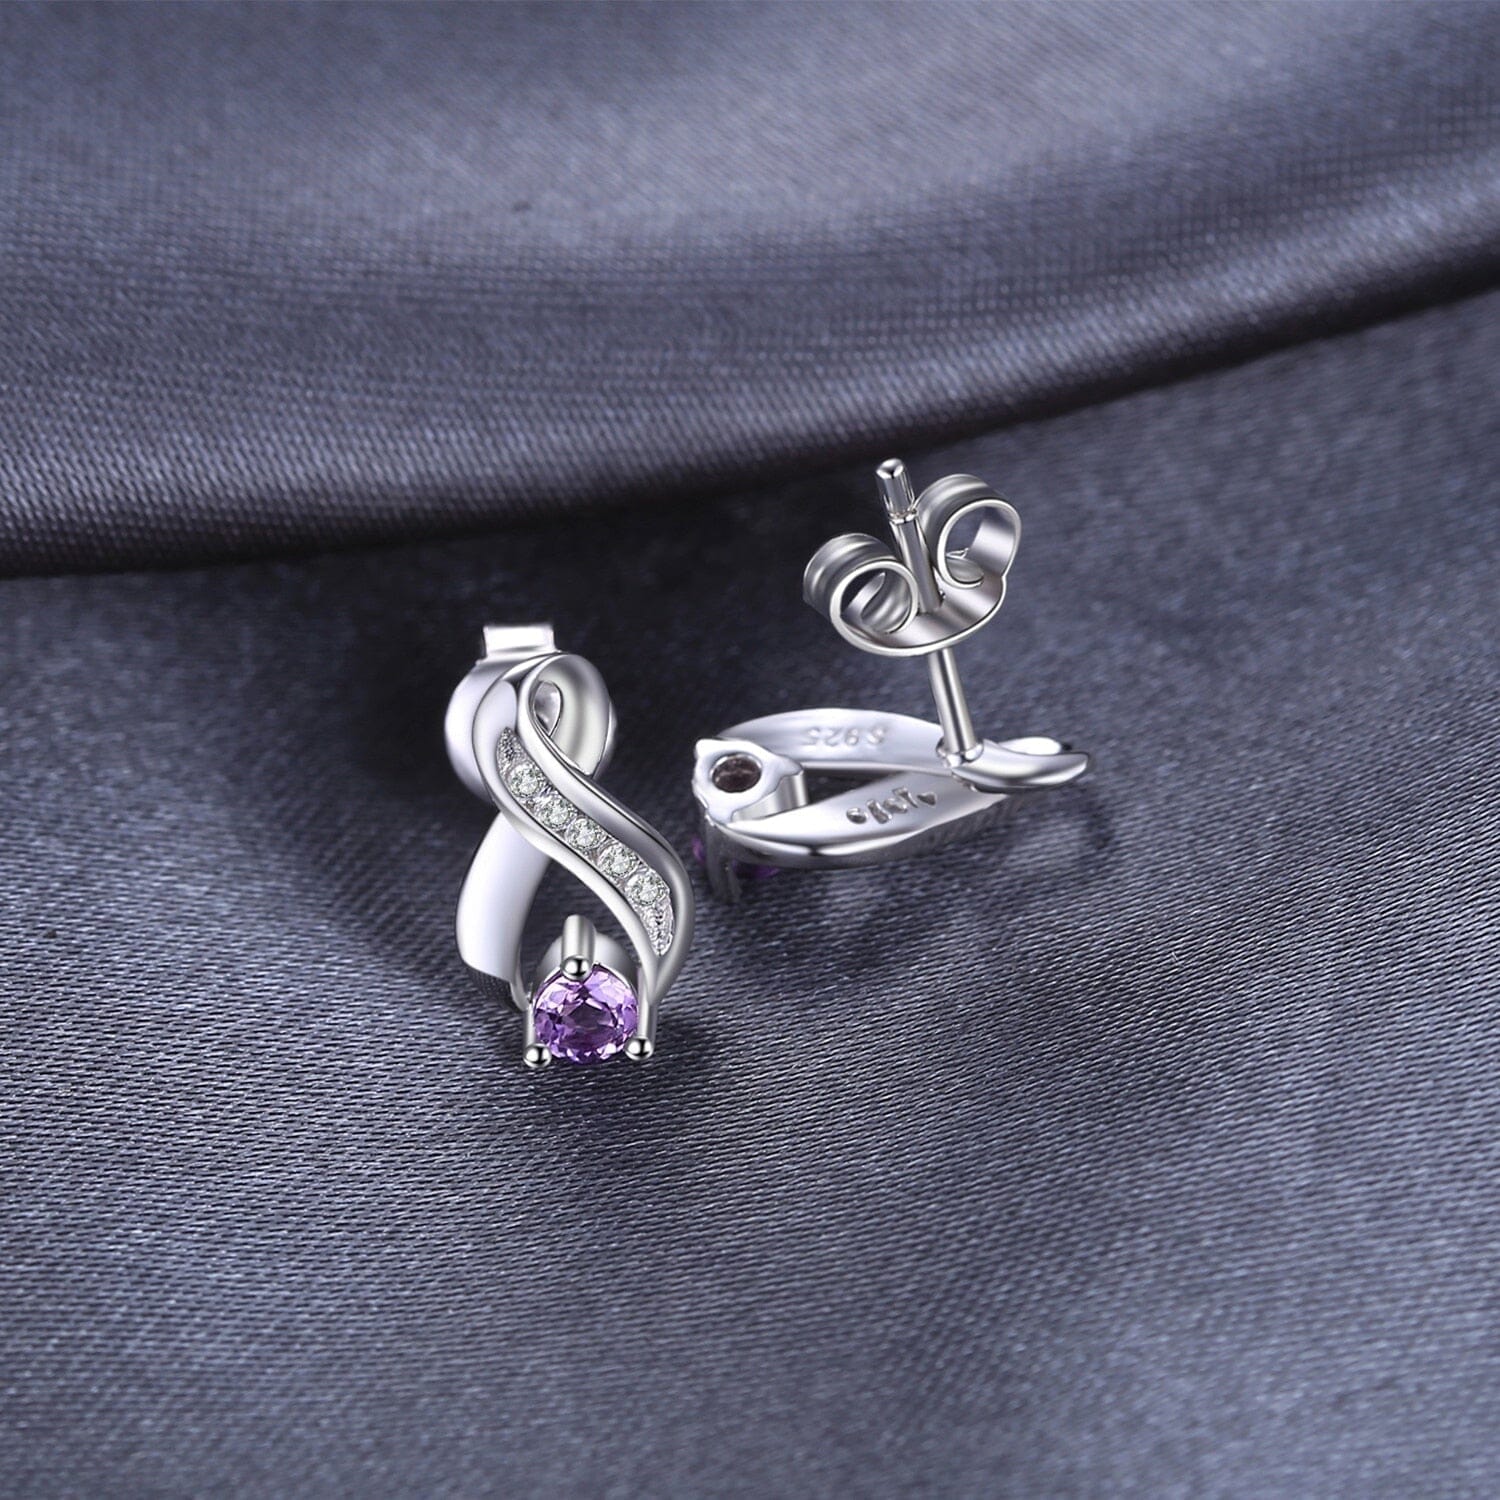 Genuine Purple Amethyst Stud Earrings - 925 Sterling SilverEarrings